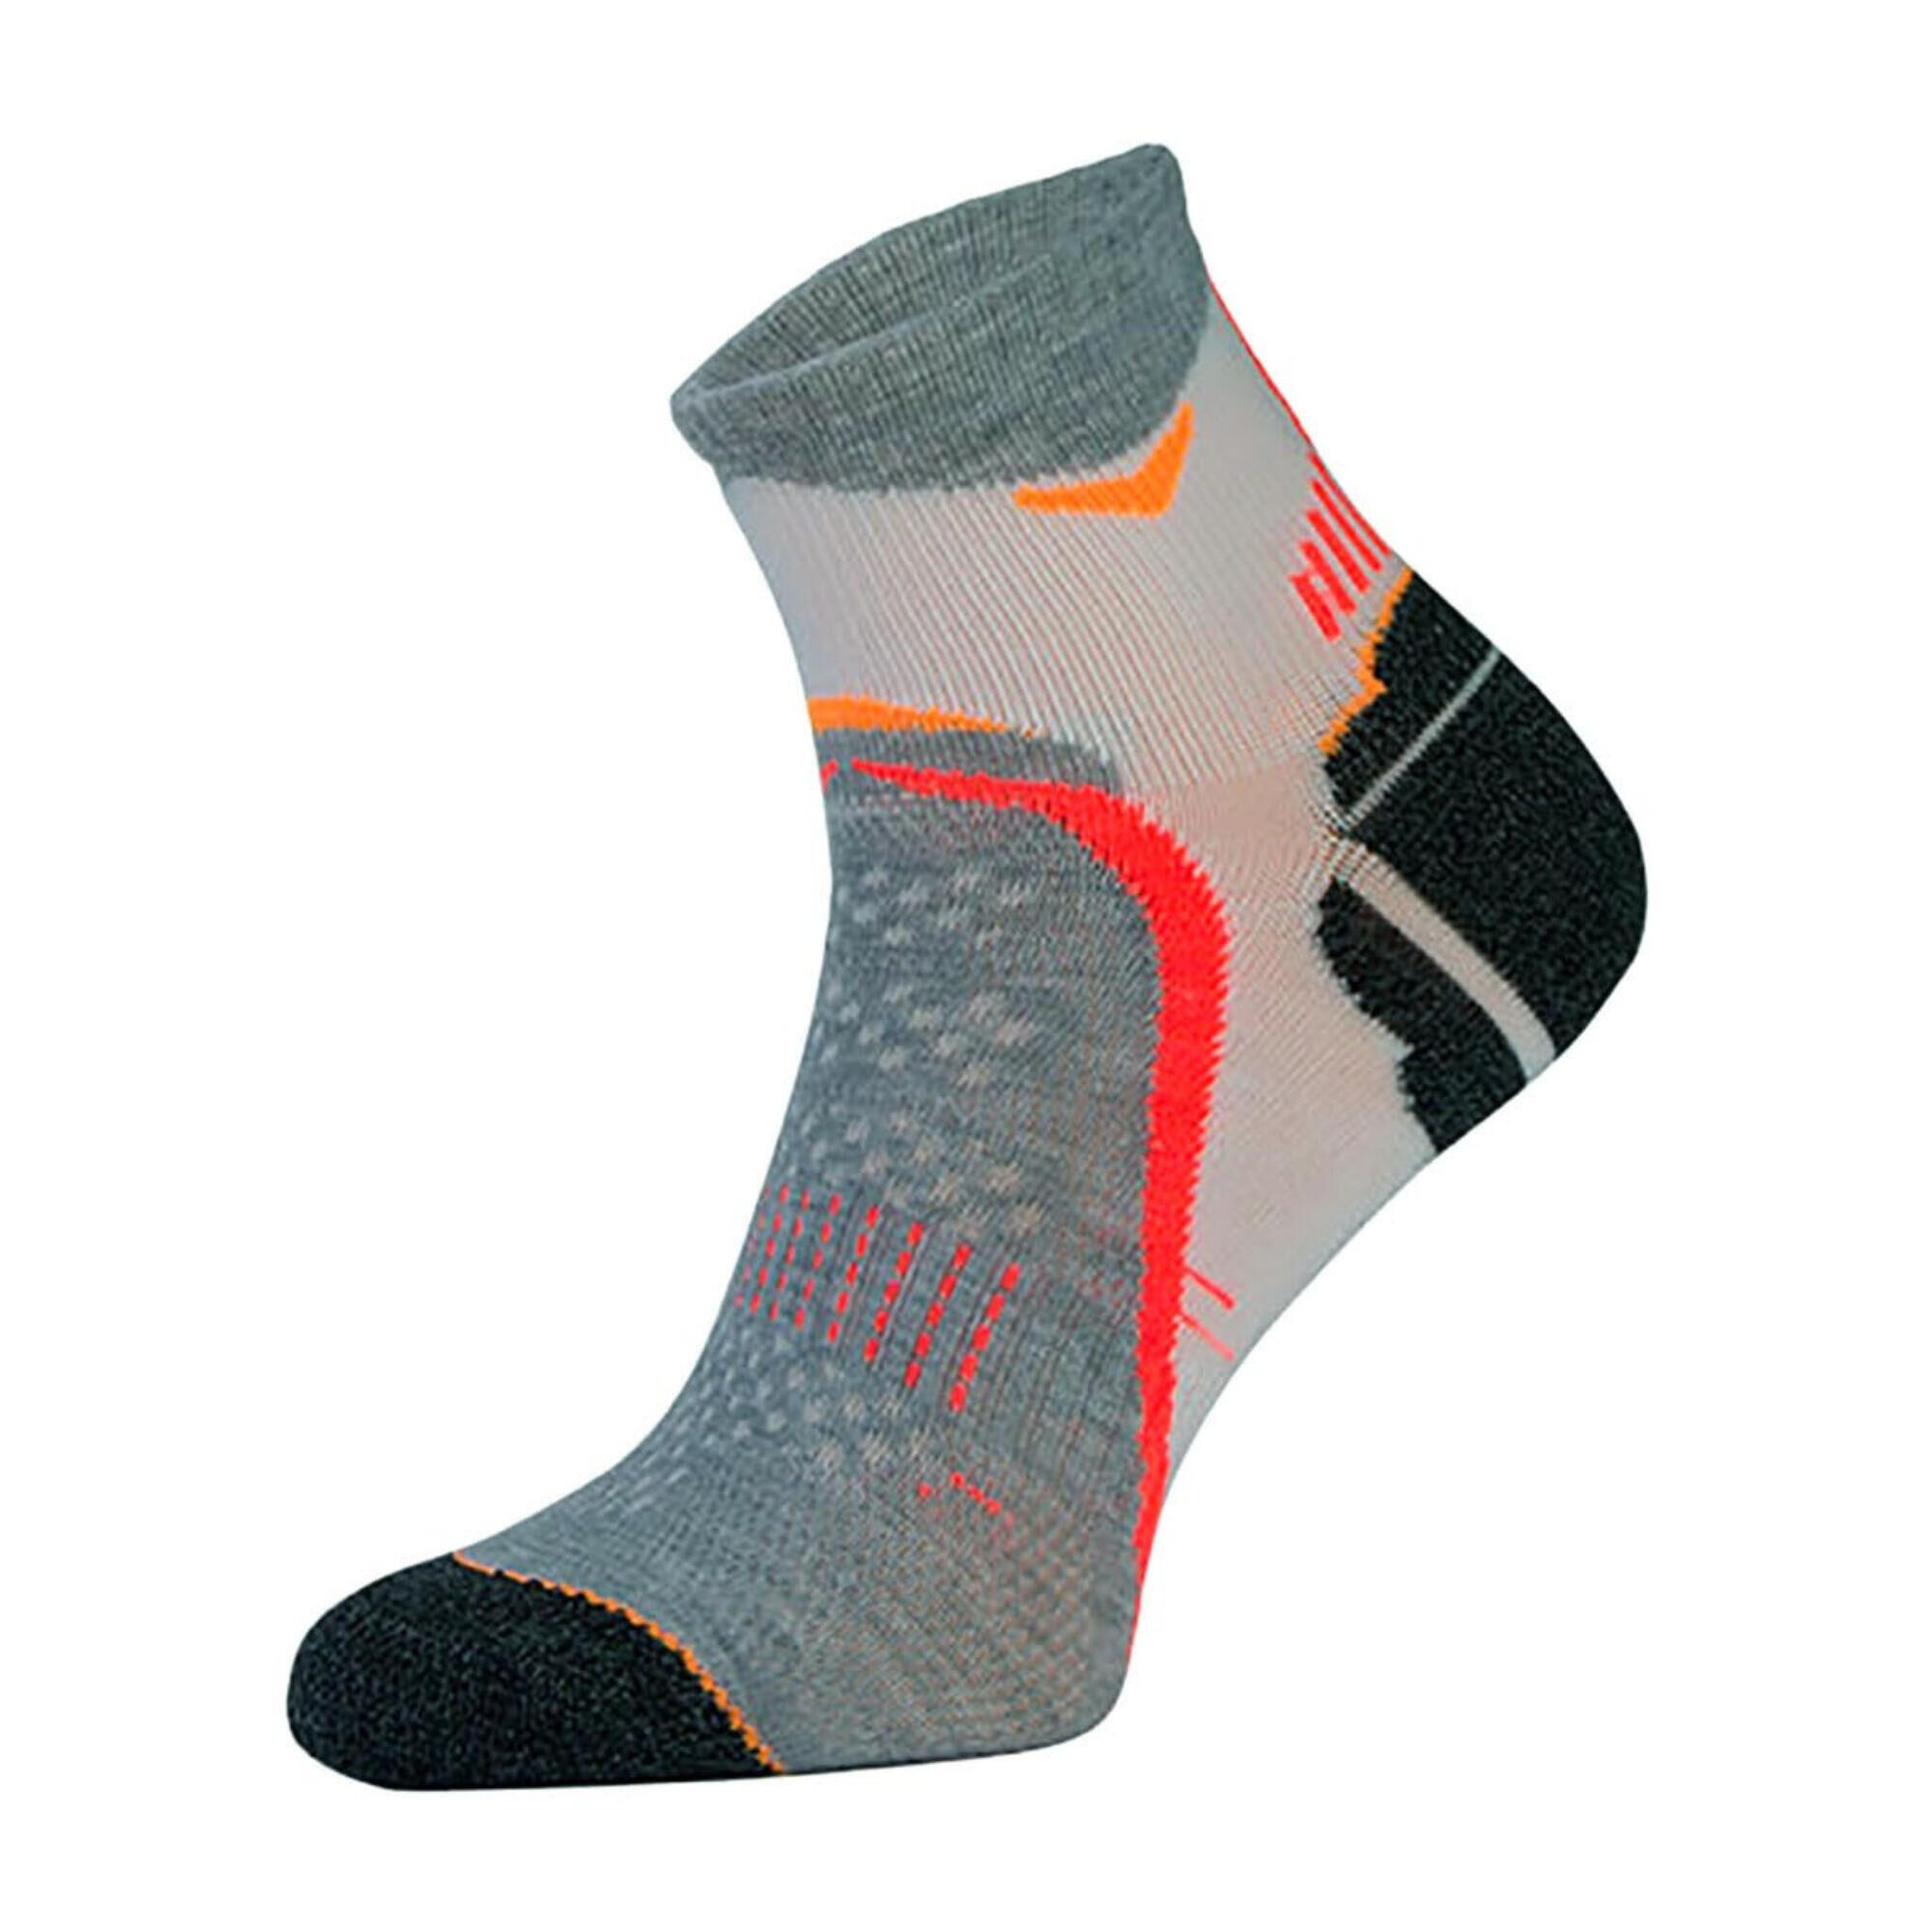 COMODO Drytex Yarn Arch Support Durable Running Jogging Socks